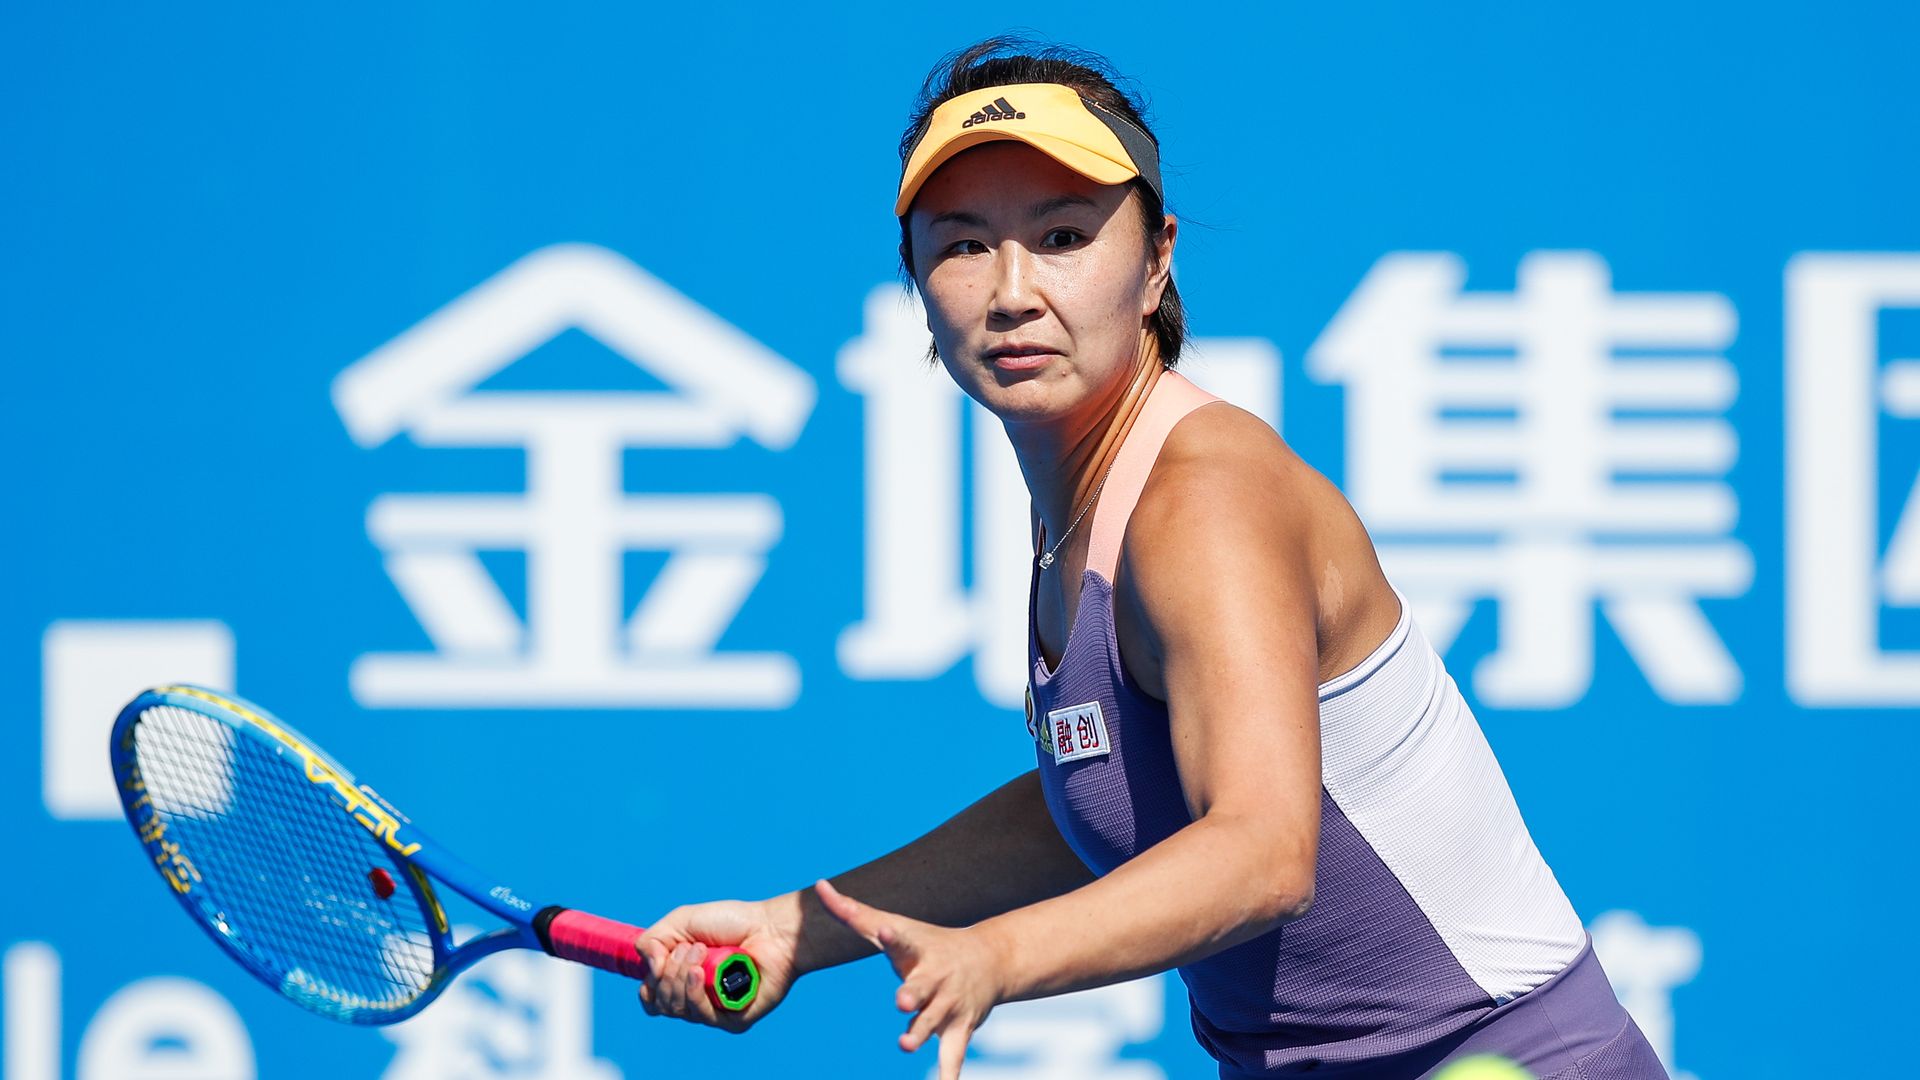 Photo of a tennis ball in the air as Peng Shuai raises her racket